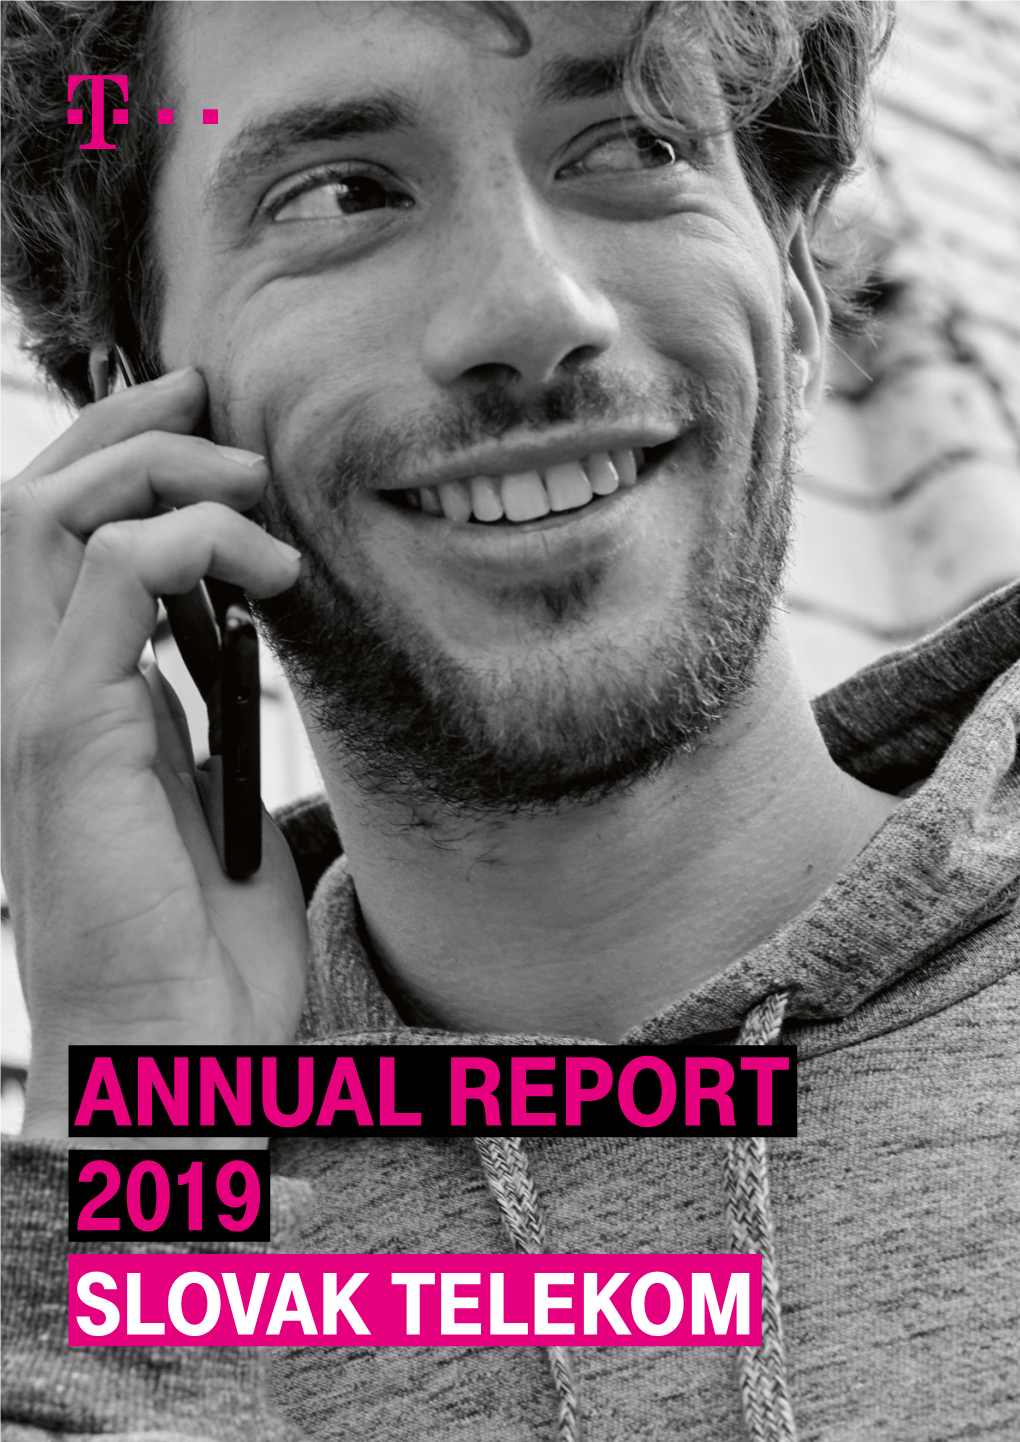 Annual Report 2019 Slovak Telekom Content